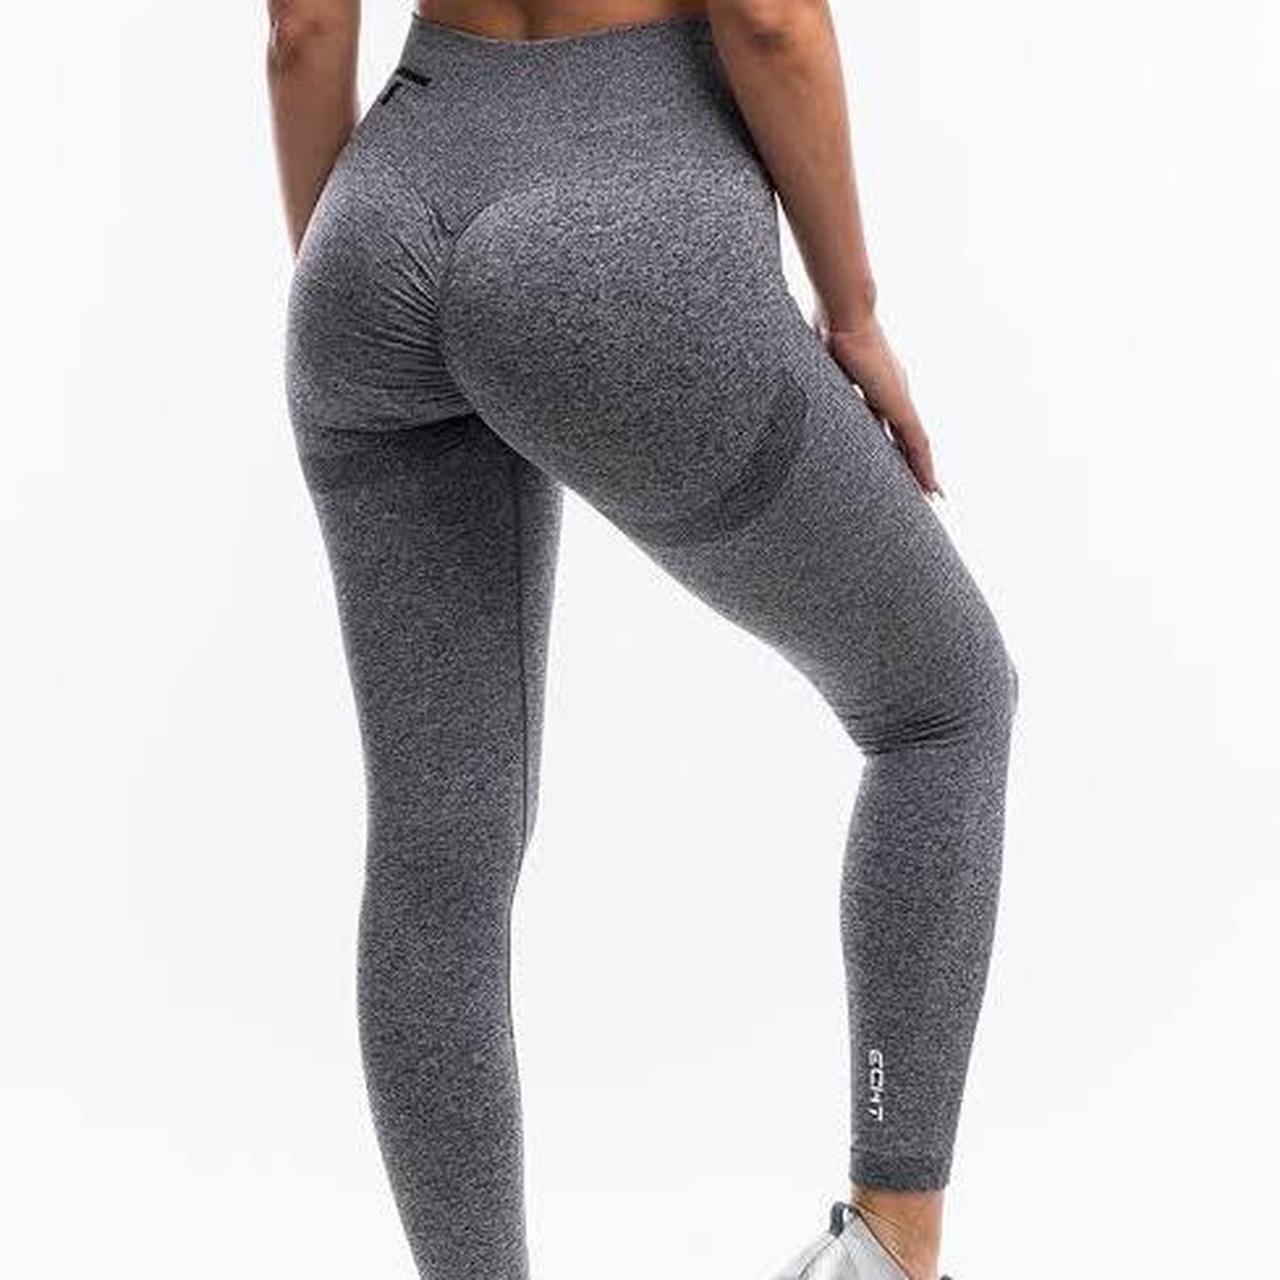 ECHT charcoal grey arise scrunch leggings - worn - Depop